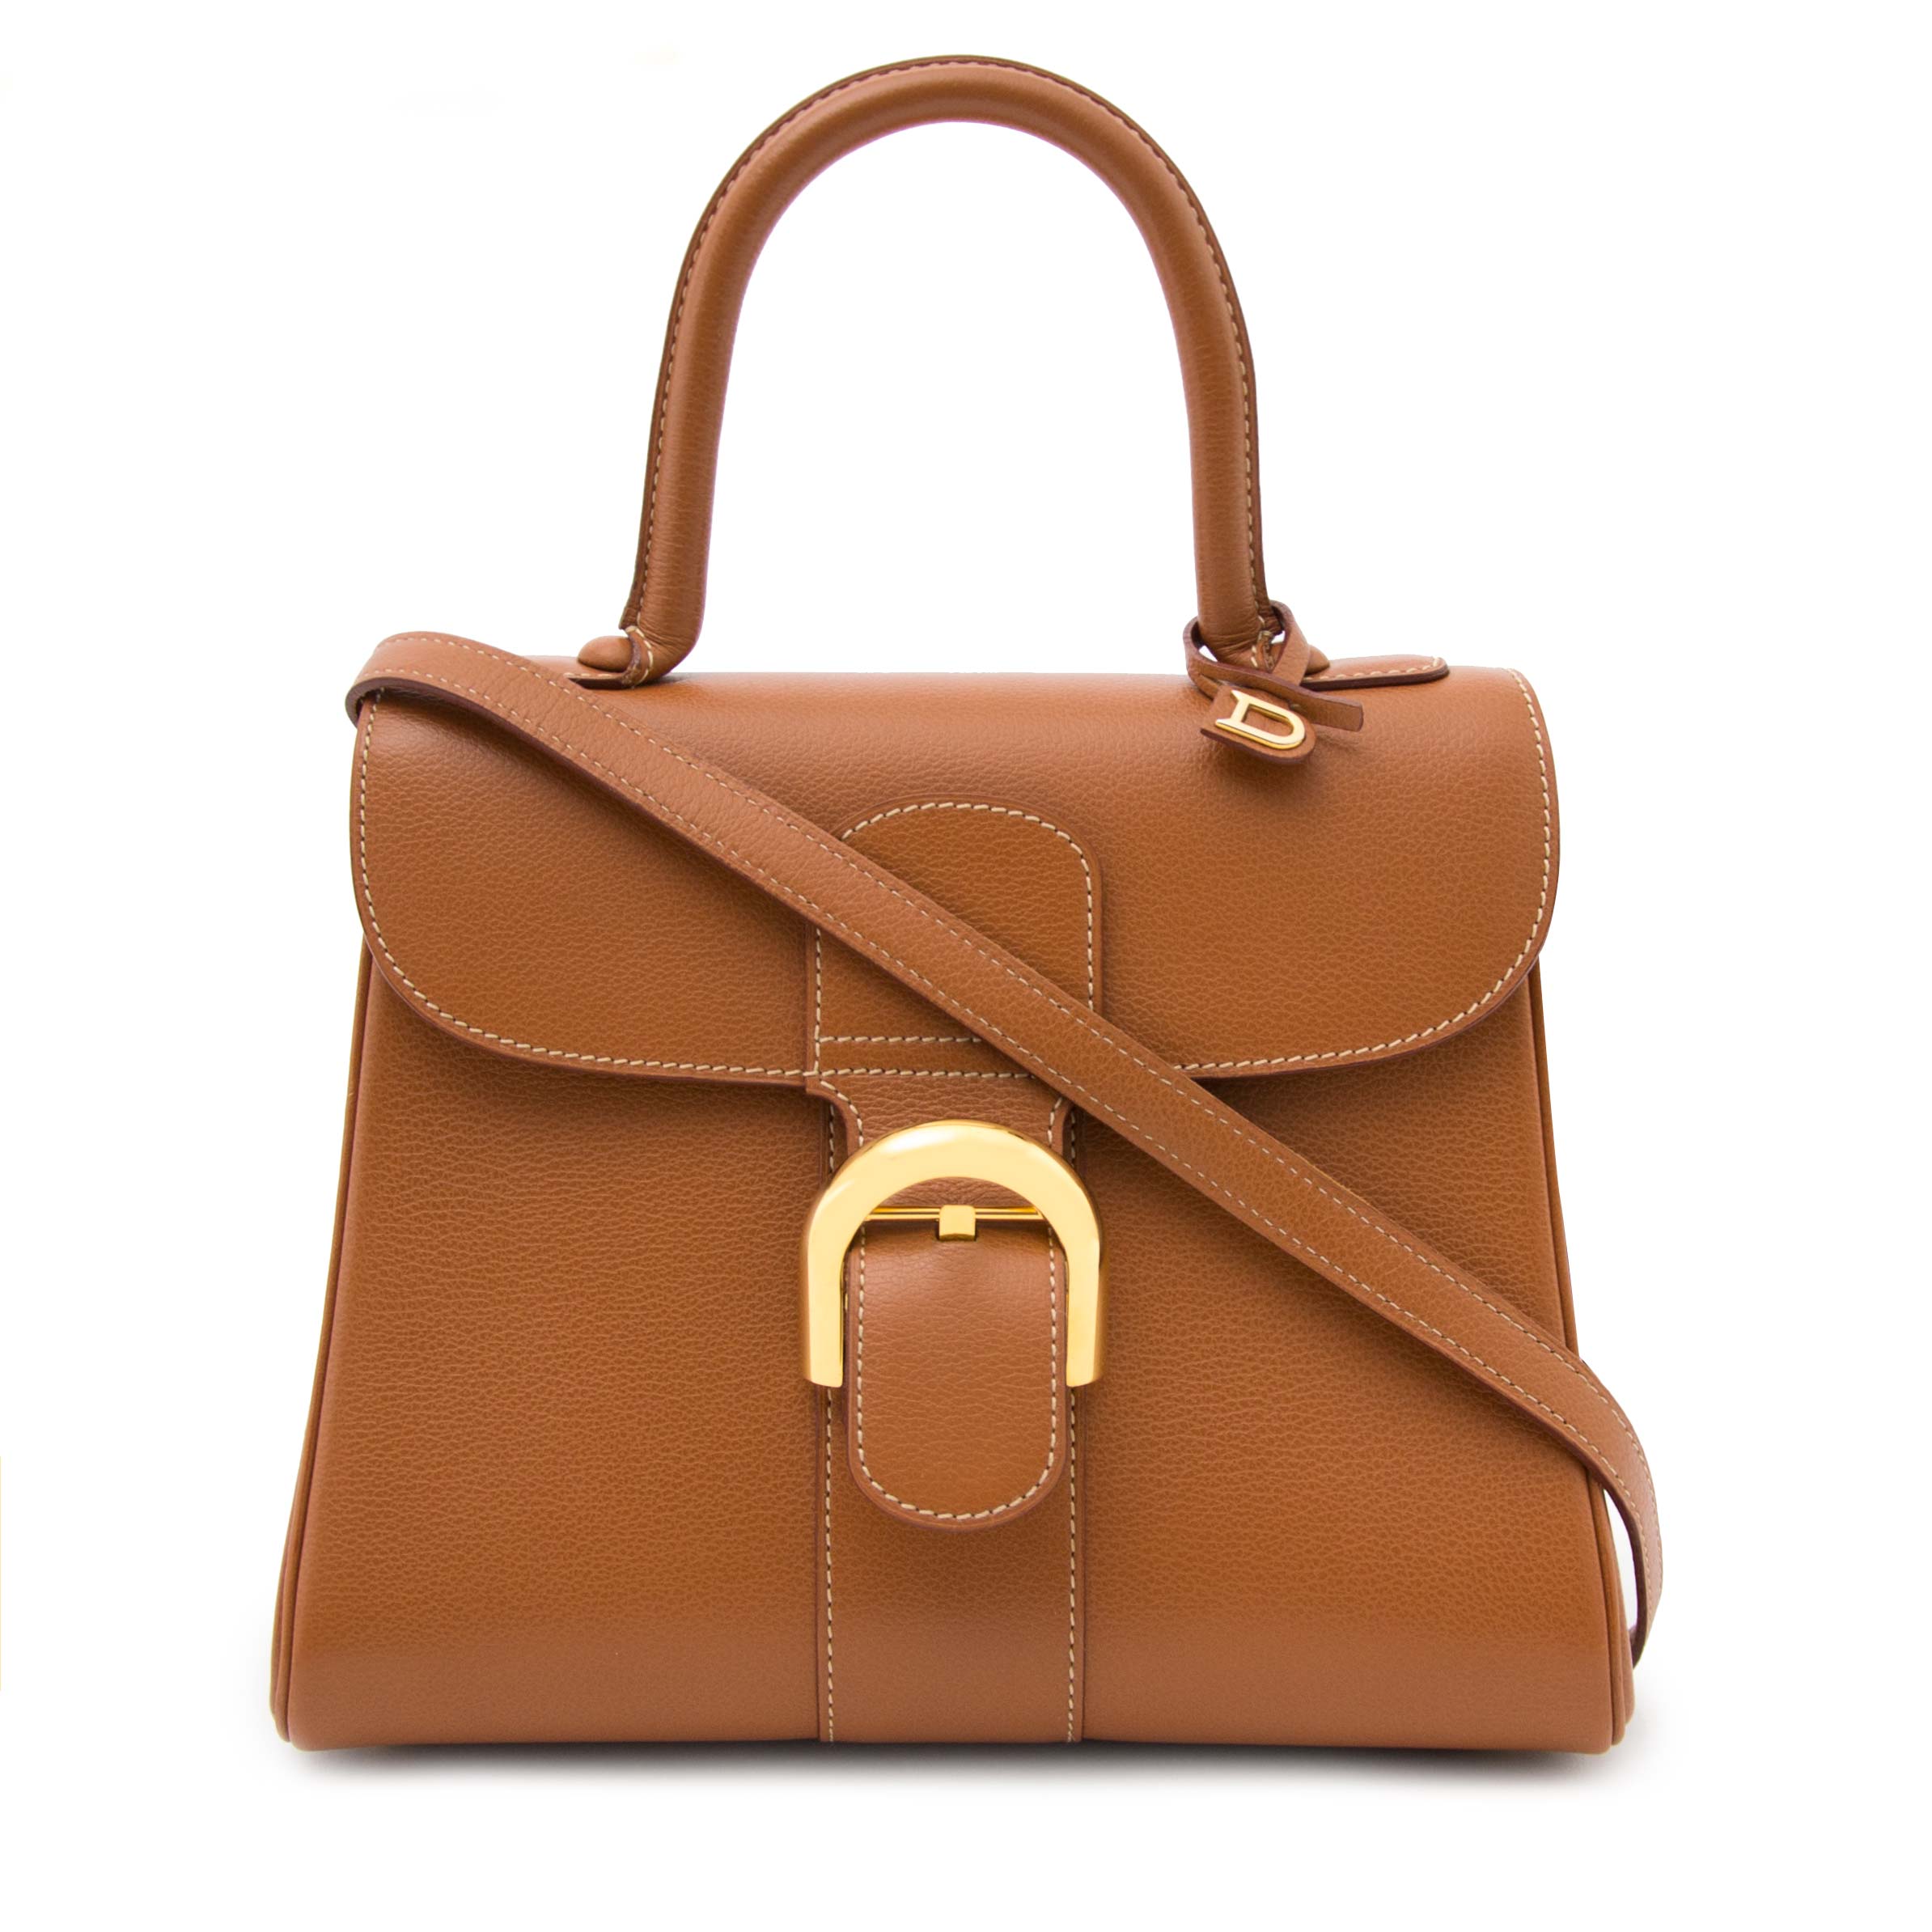 Sold at Auction: A Delvaux Brillant GM, Jumping Café leather handbag